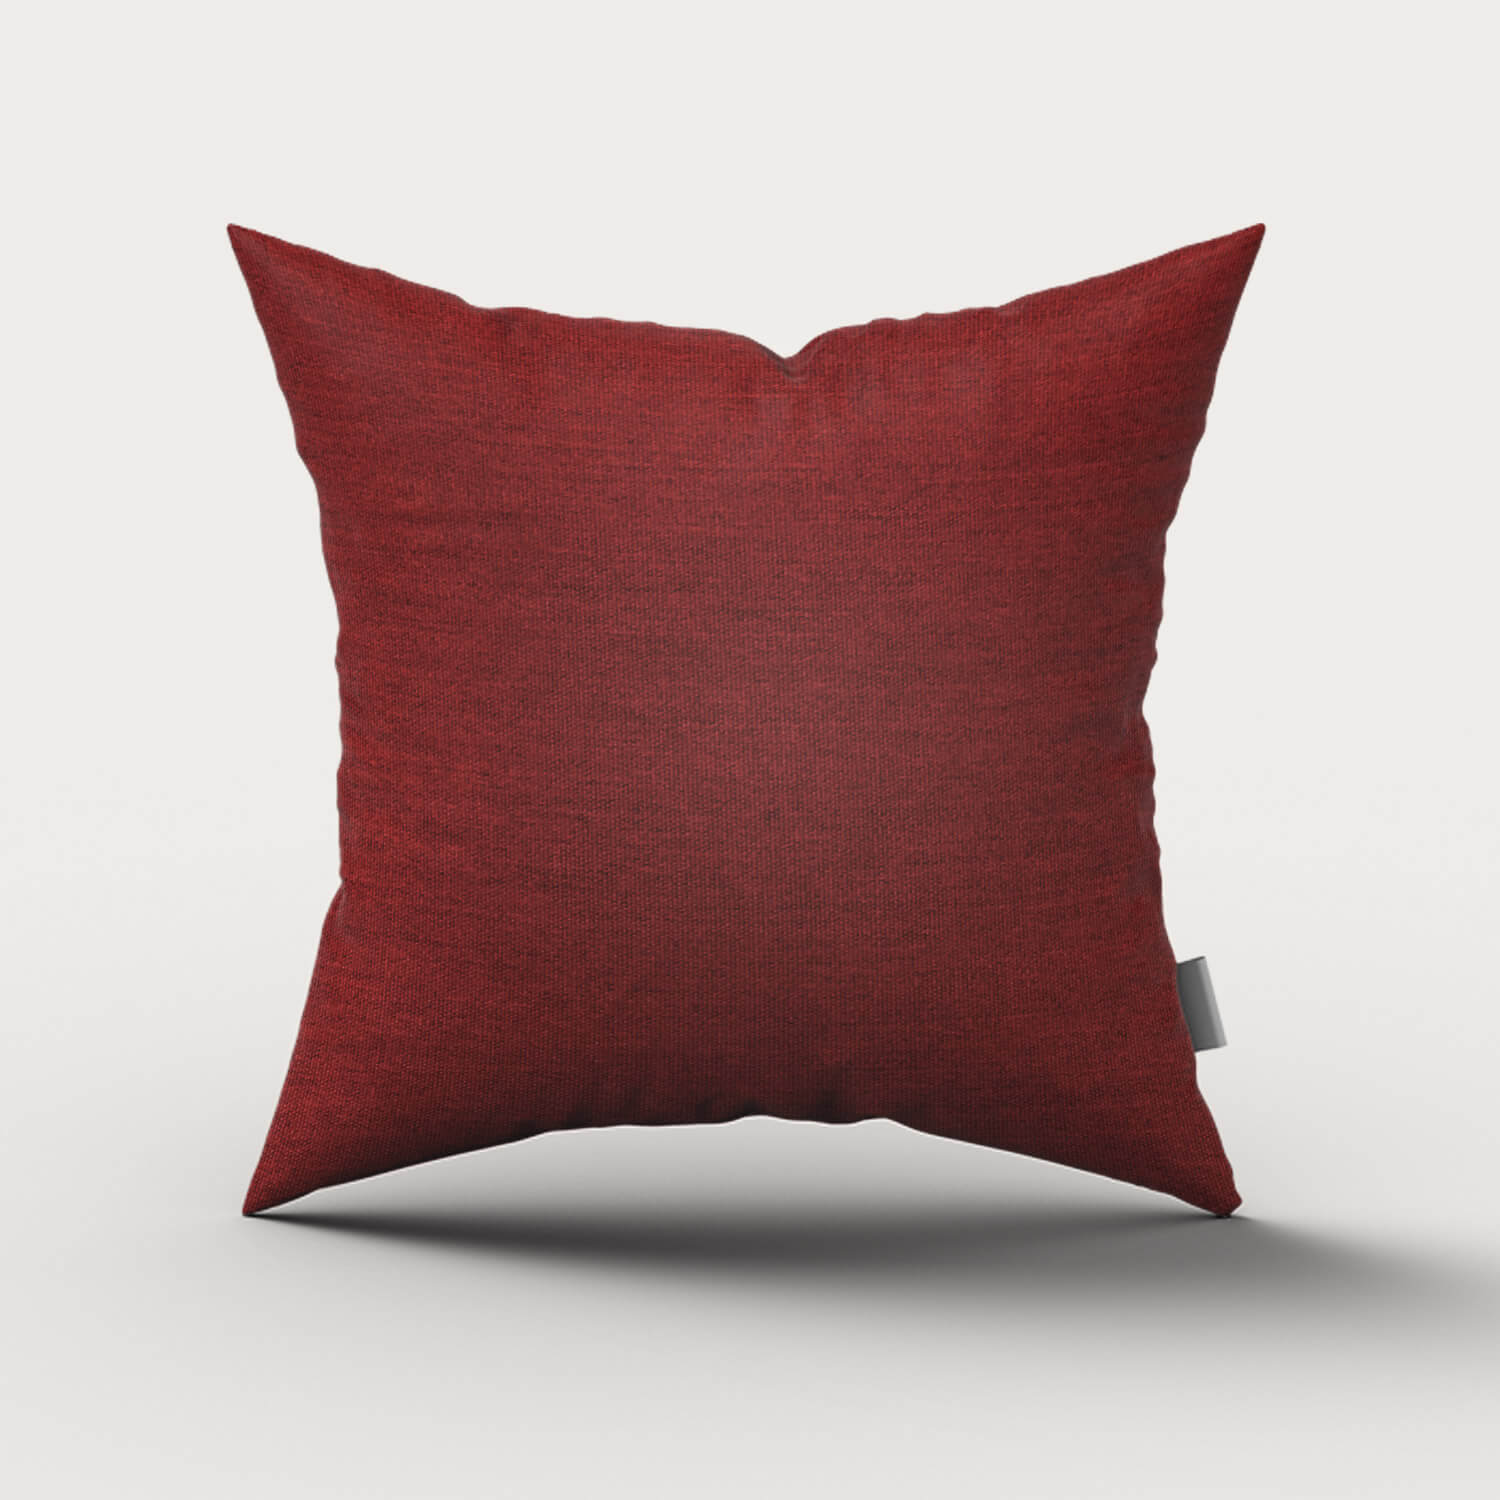 PENGI Waterproof Outdoor Pillow Case 1 Pcs - Mix Brick Red